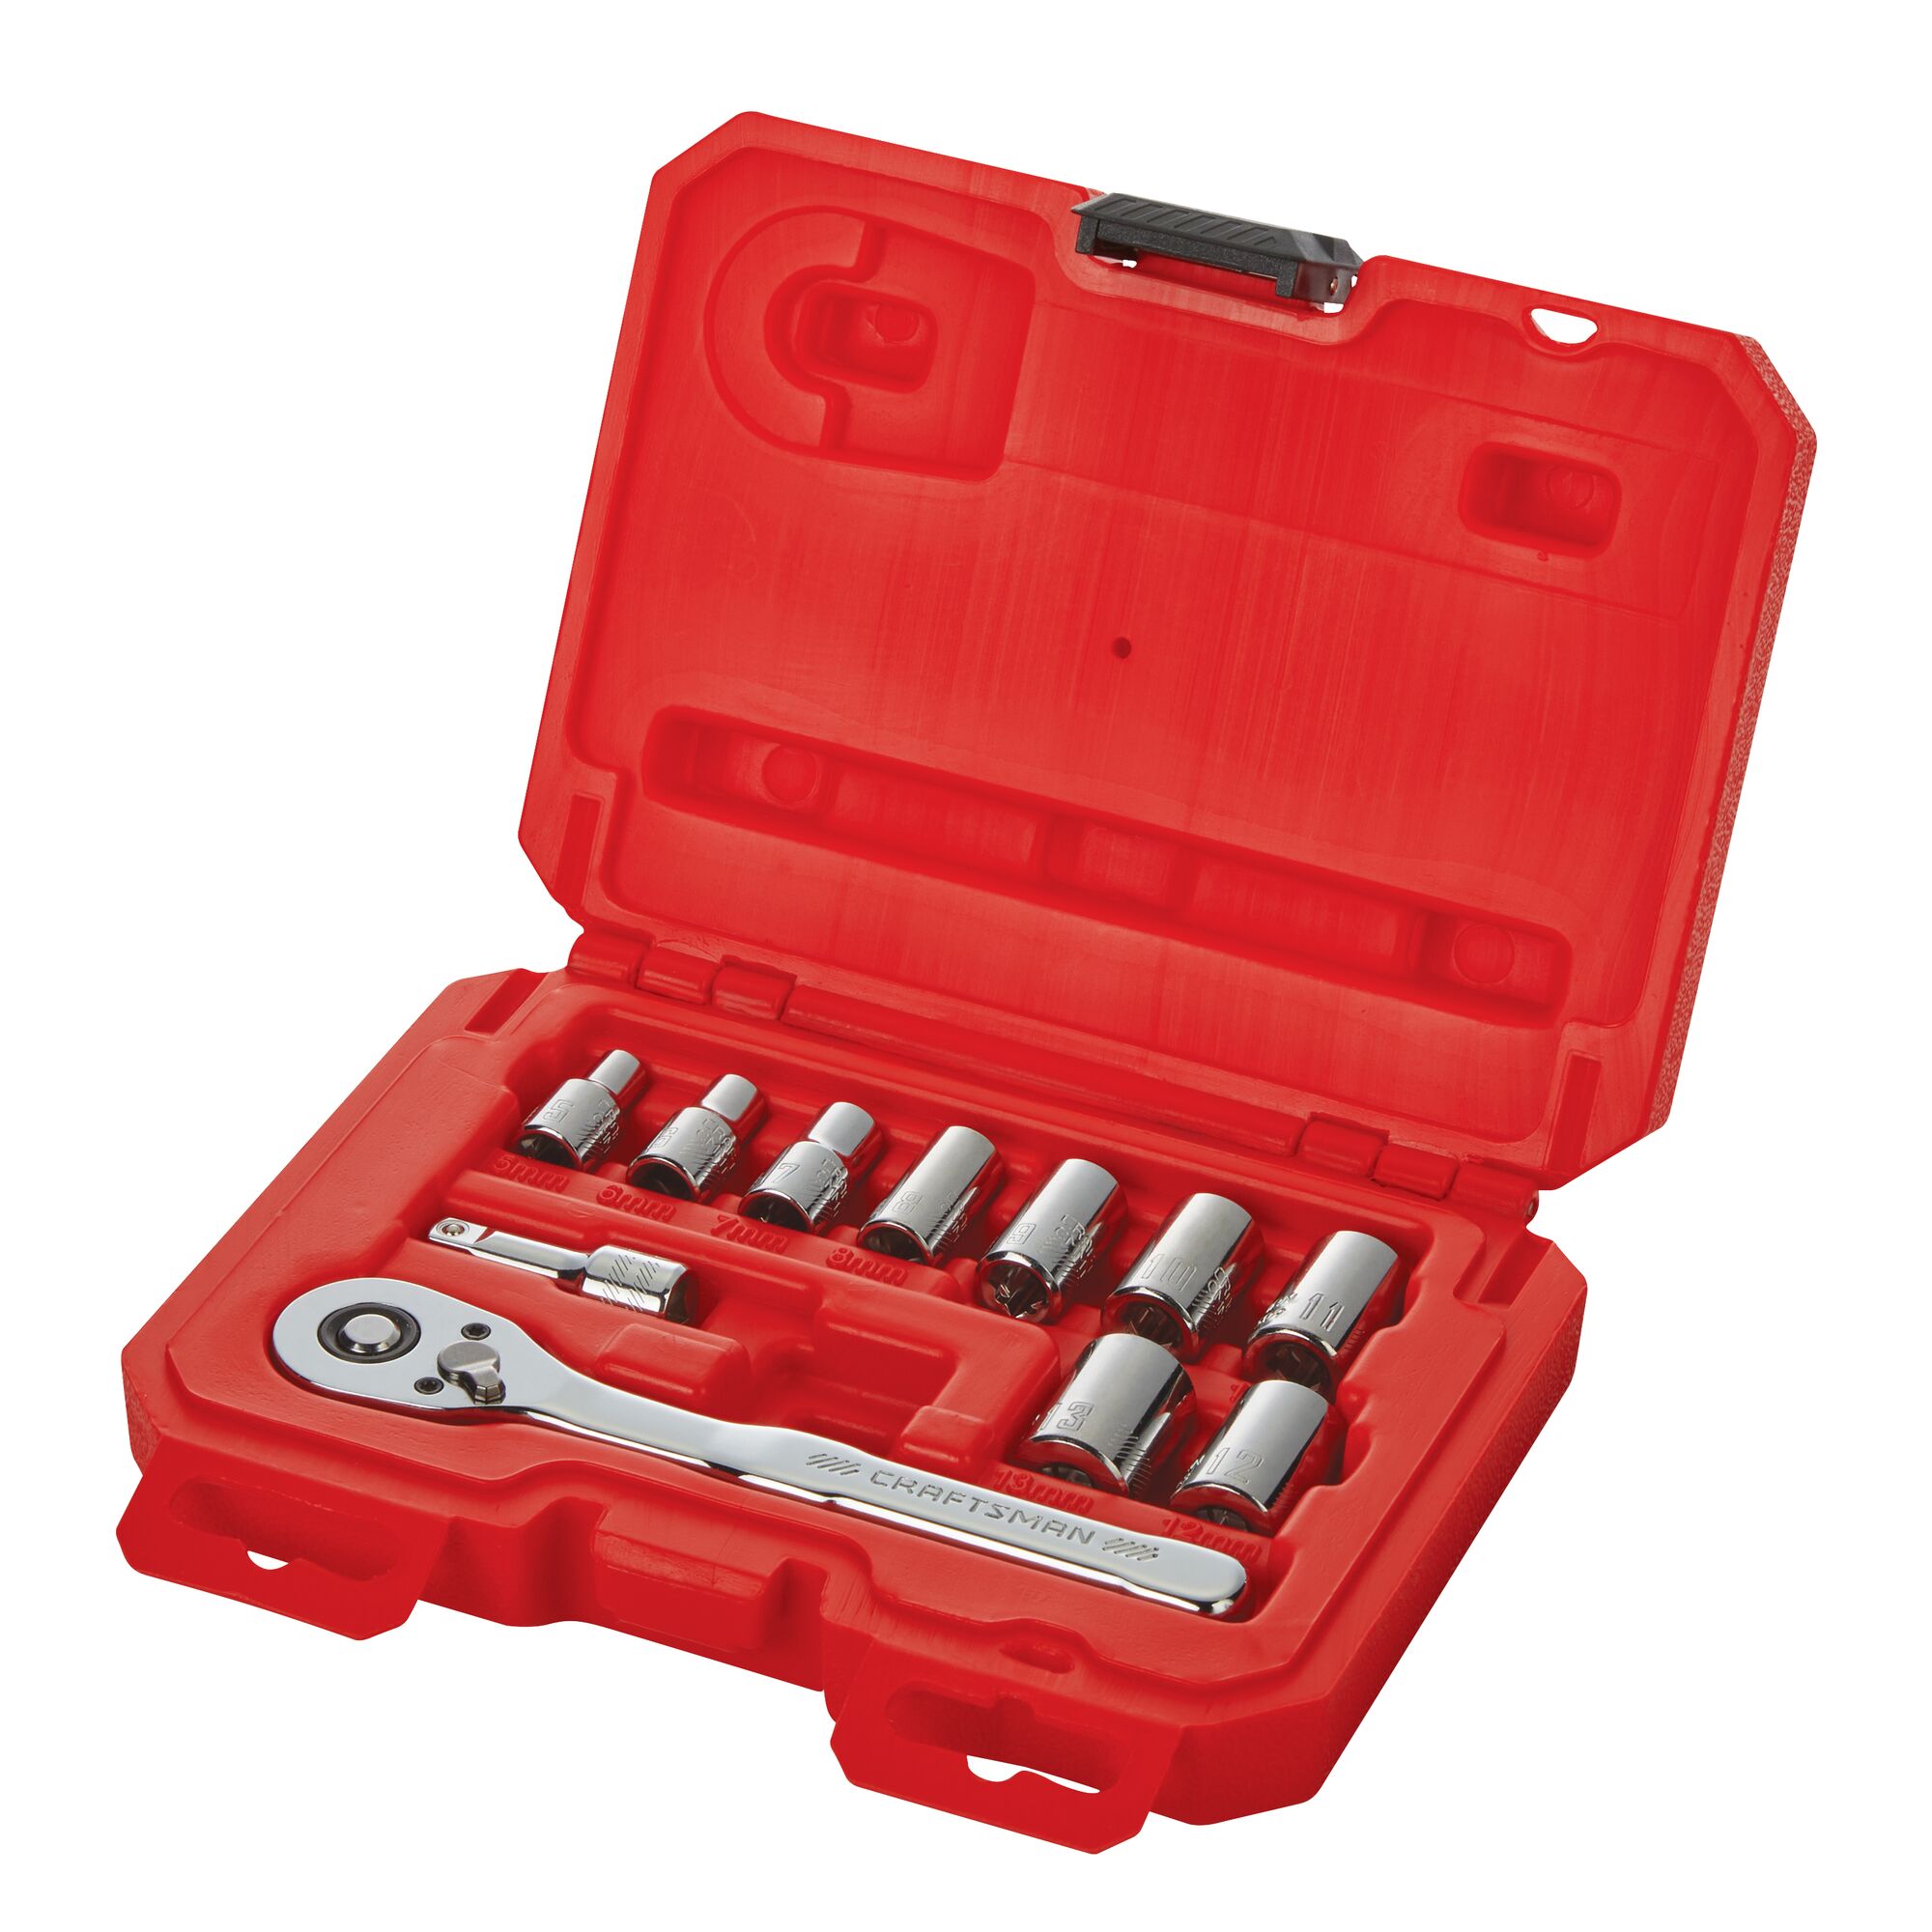 CRAFTSMAN 11 Piece 1/4 inch Metric Mechanics Tool Set in open red case